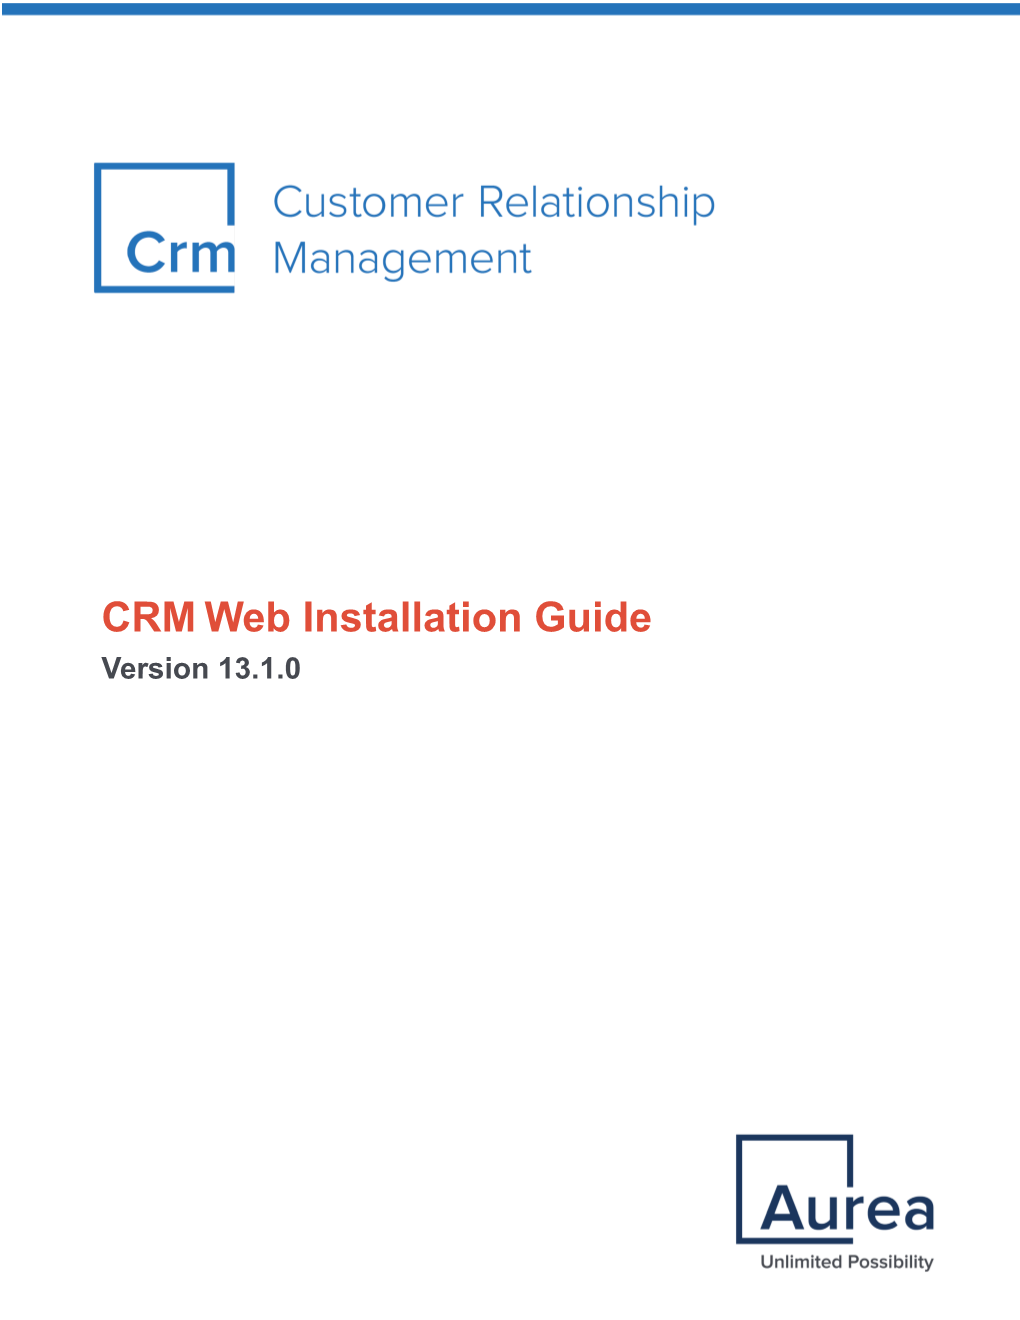 CRM Web Installation Guide Version 13.1.0 Notices